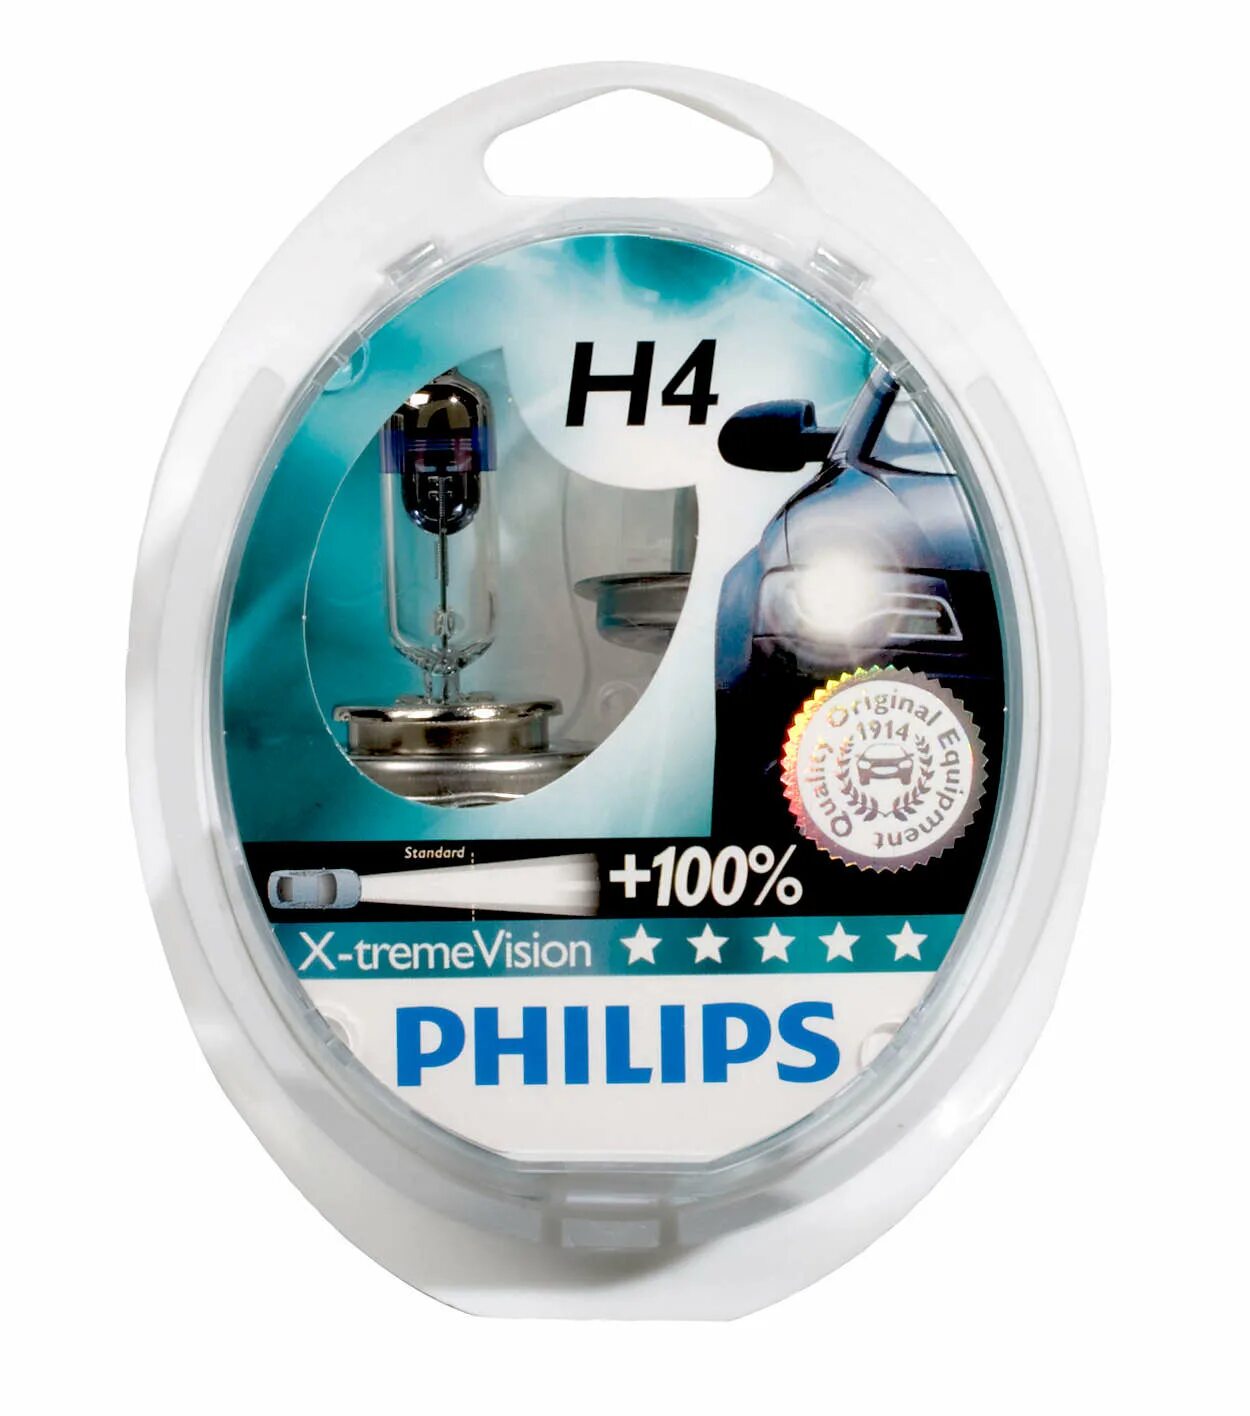 Philips h4 12v 60 55w. Лампа н7 55w "Philips" +30% оригинал (10/100) топ. Philips Crystal Vision h4 p43t. H4 светодиодные лампы x treme Vision. Philips x-treme Vision.